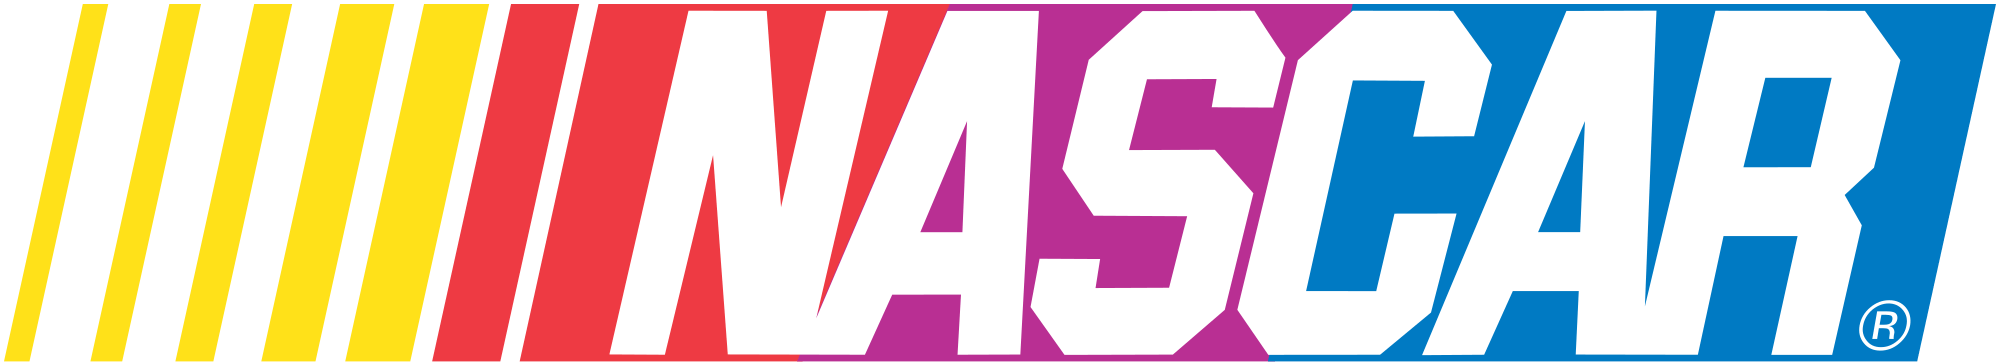 Nascar Logo Transparent File